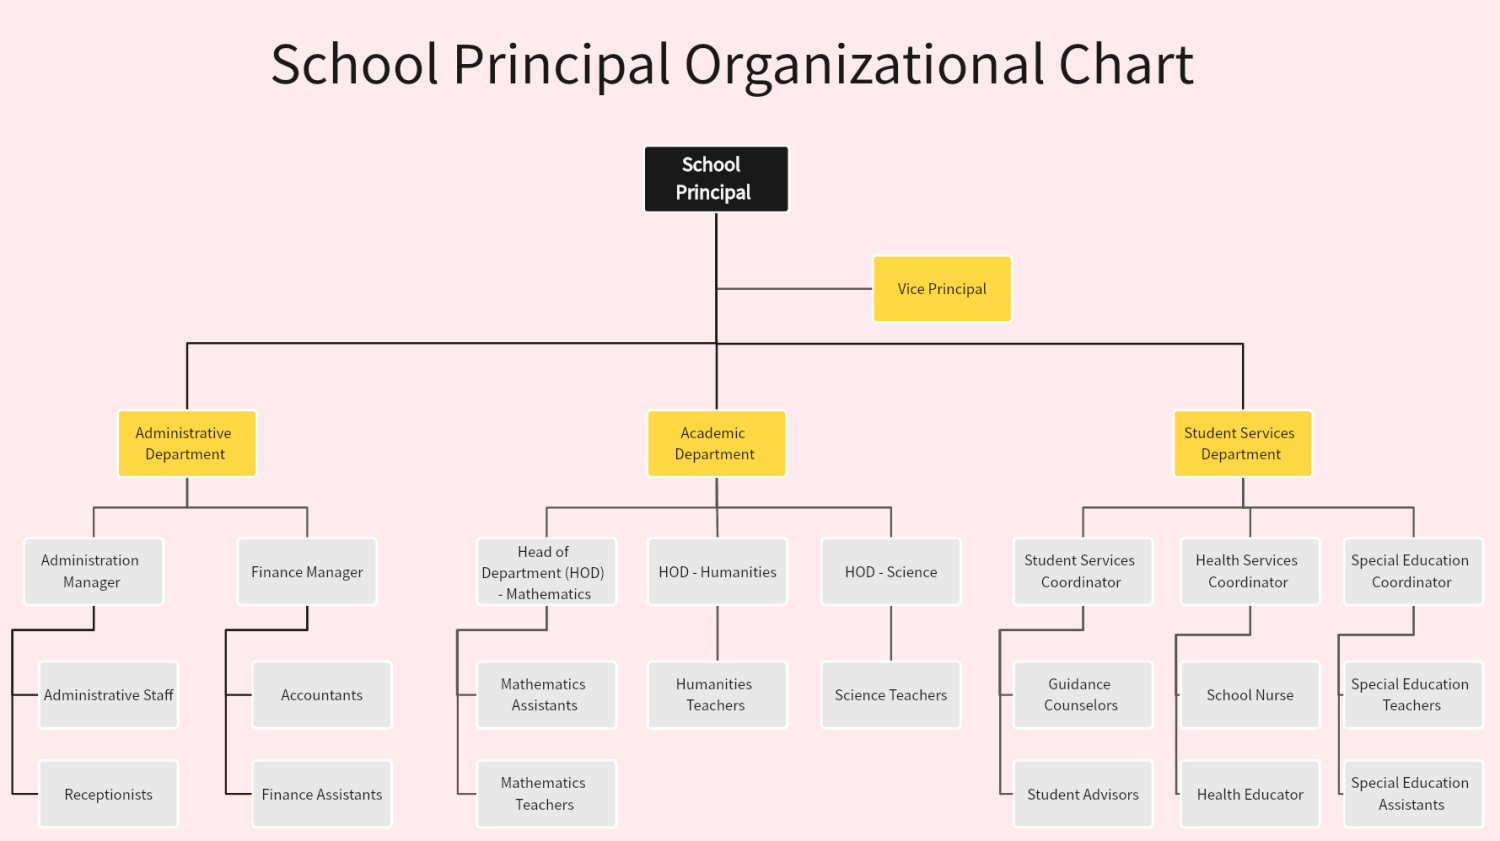 org-chart/school-principal-organizational-chart